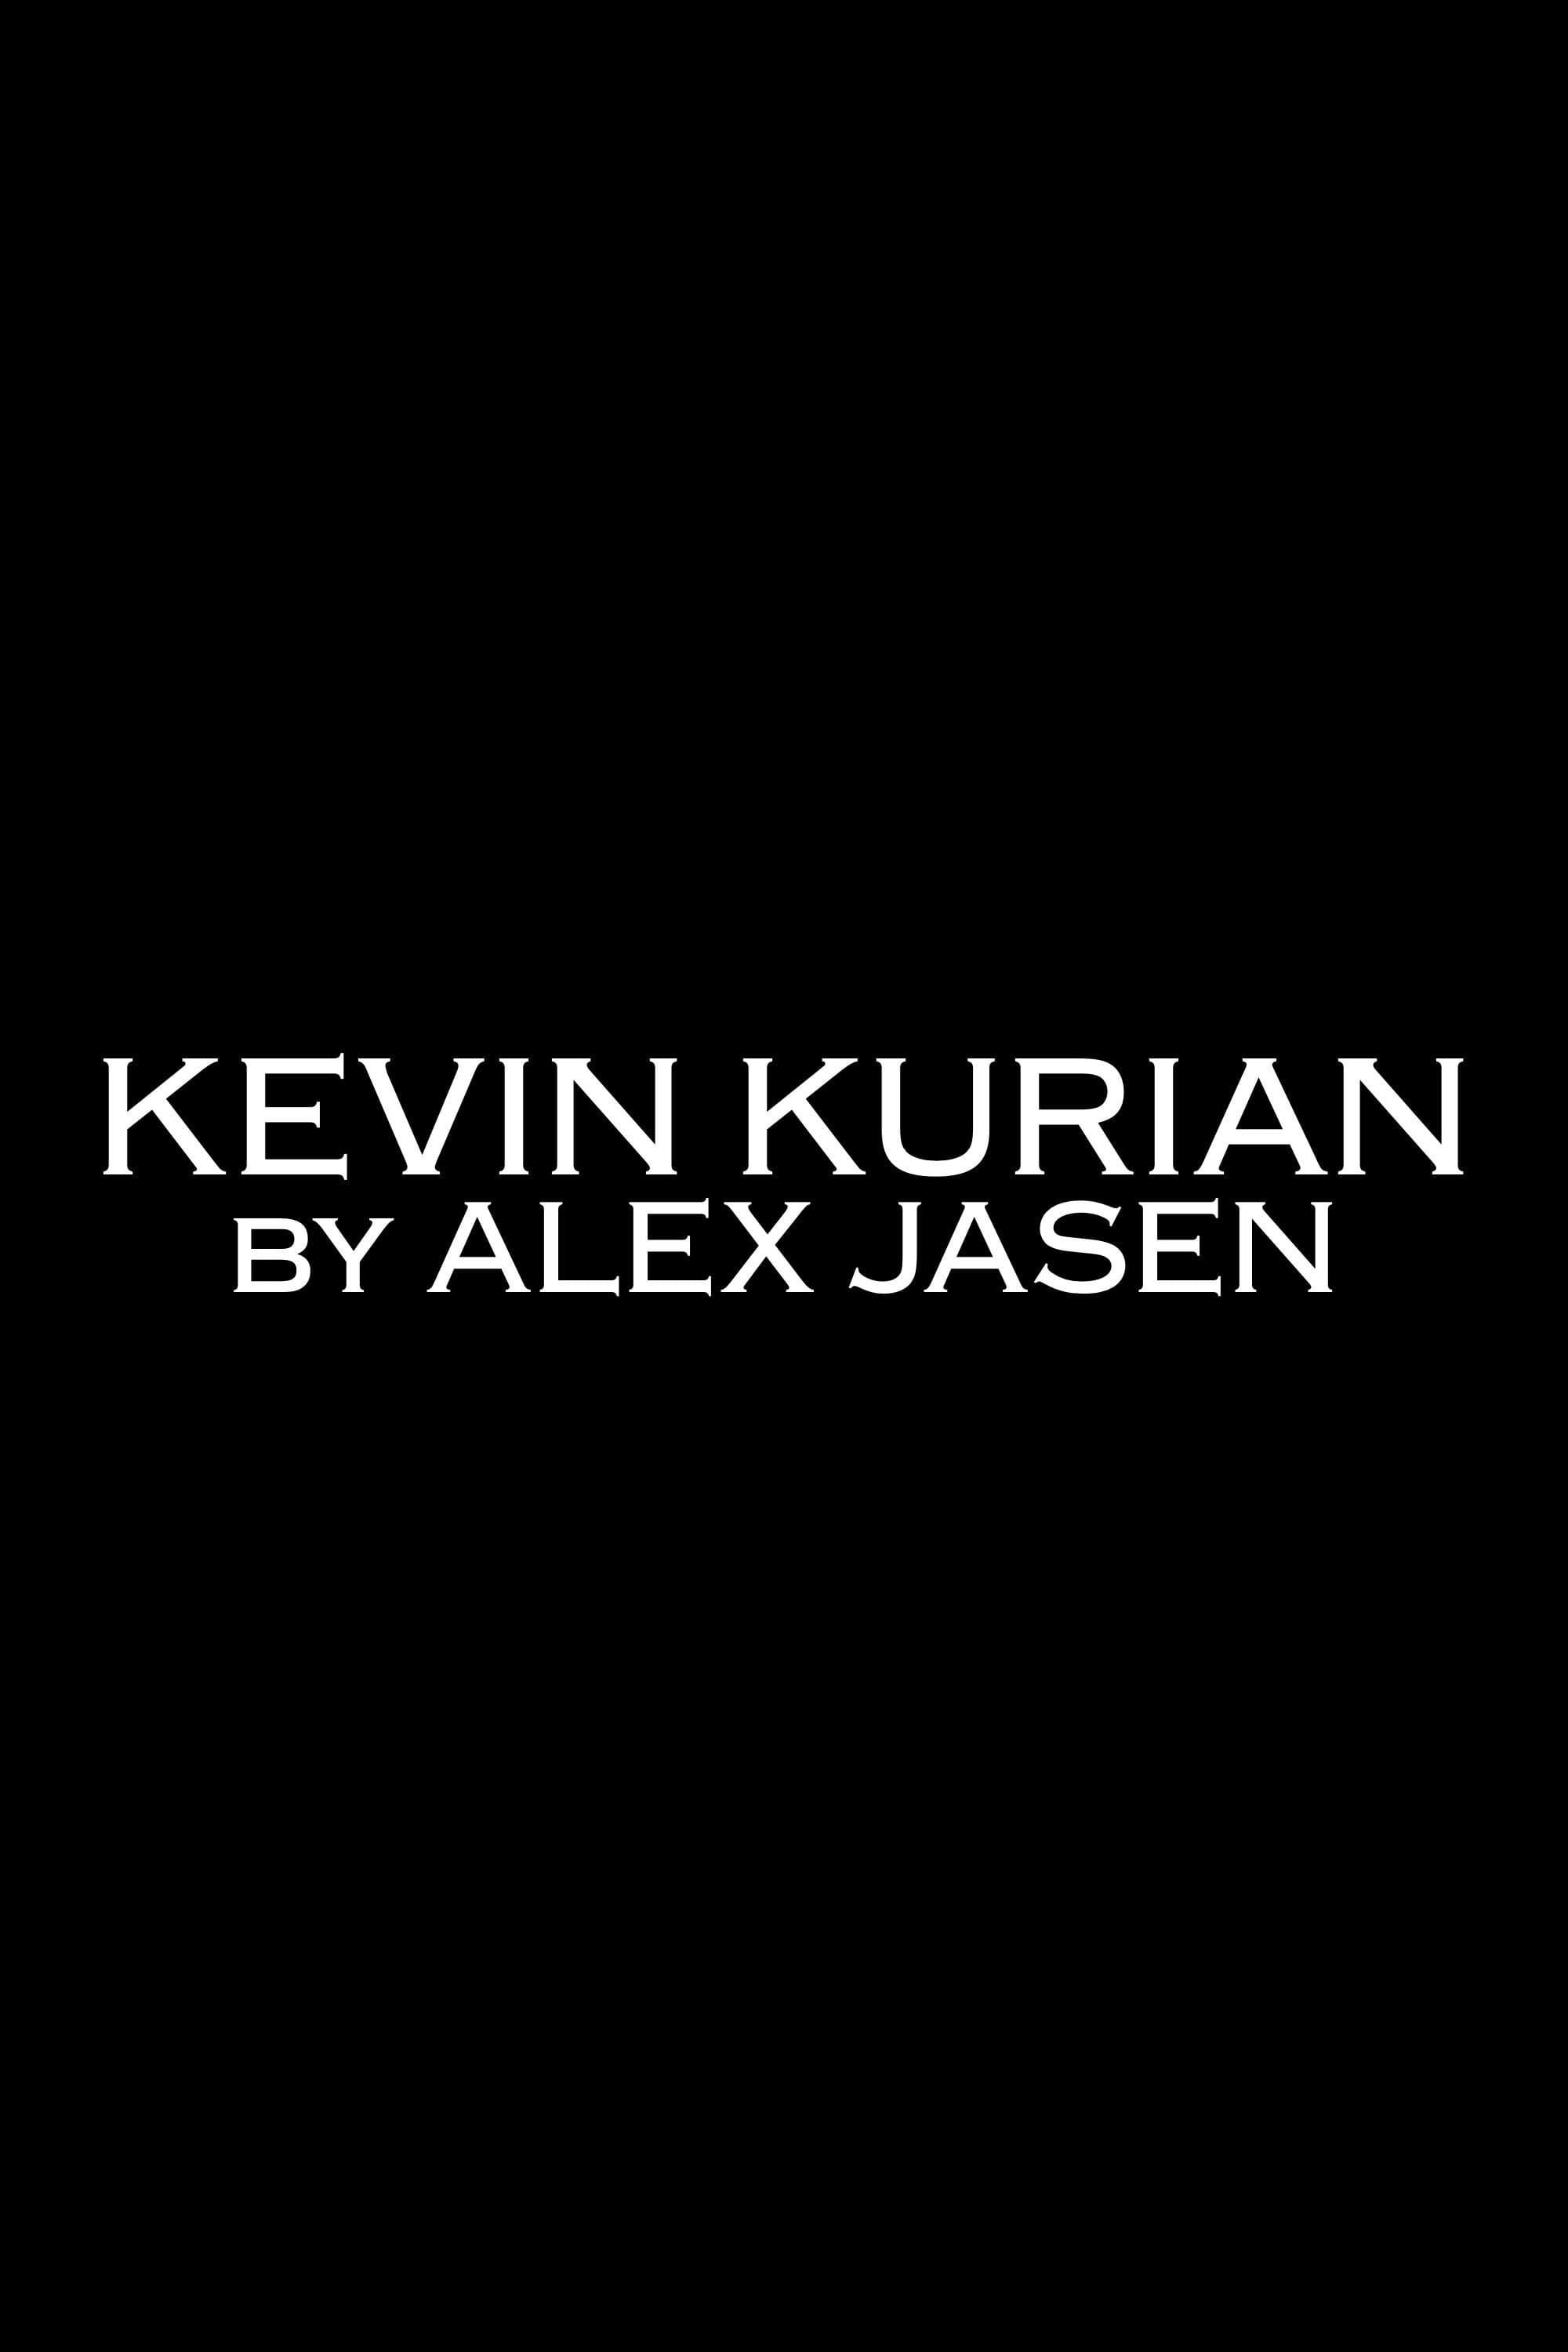 Kevin Kurian by Alex Jasen poster